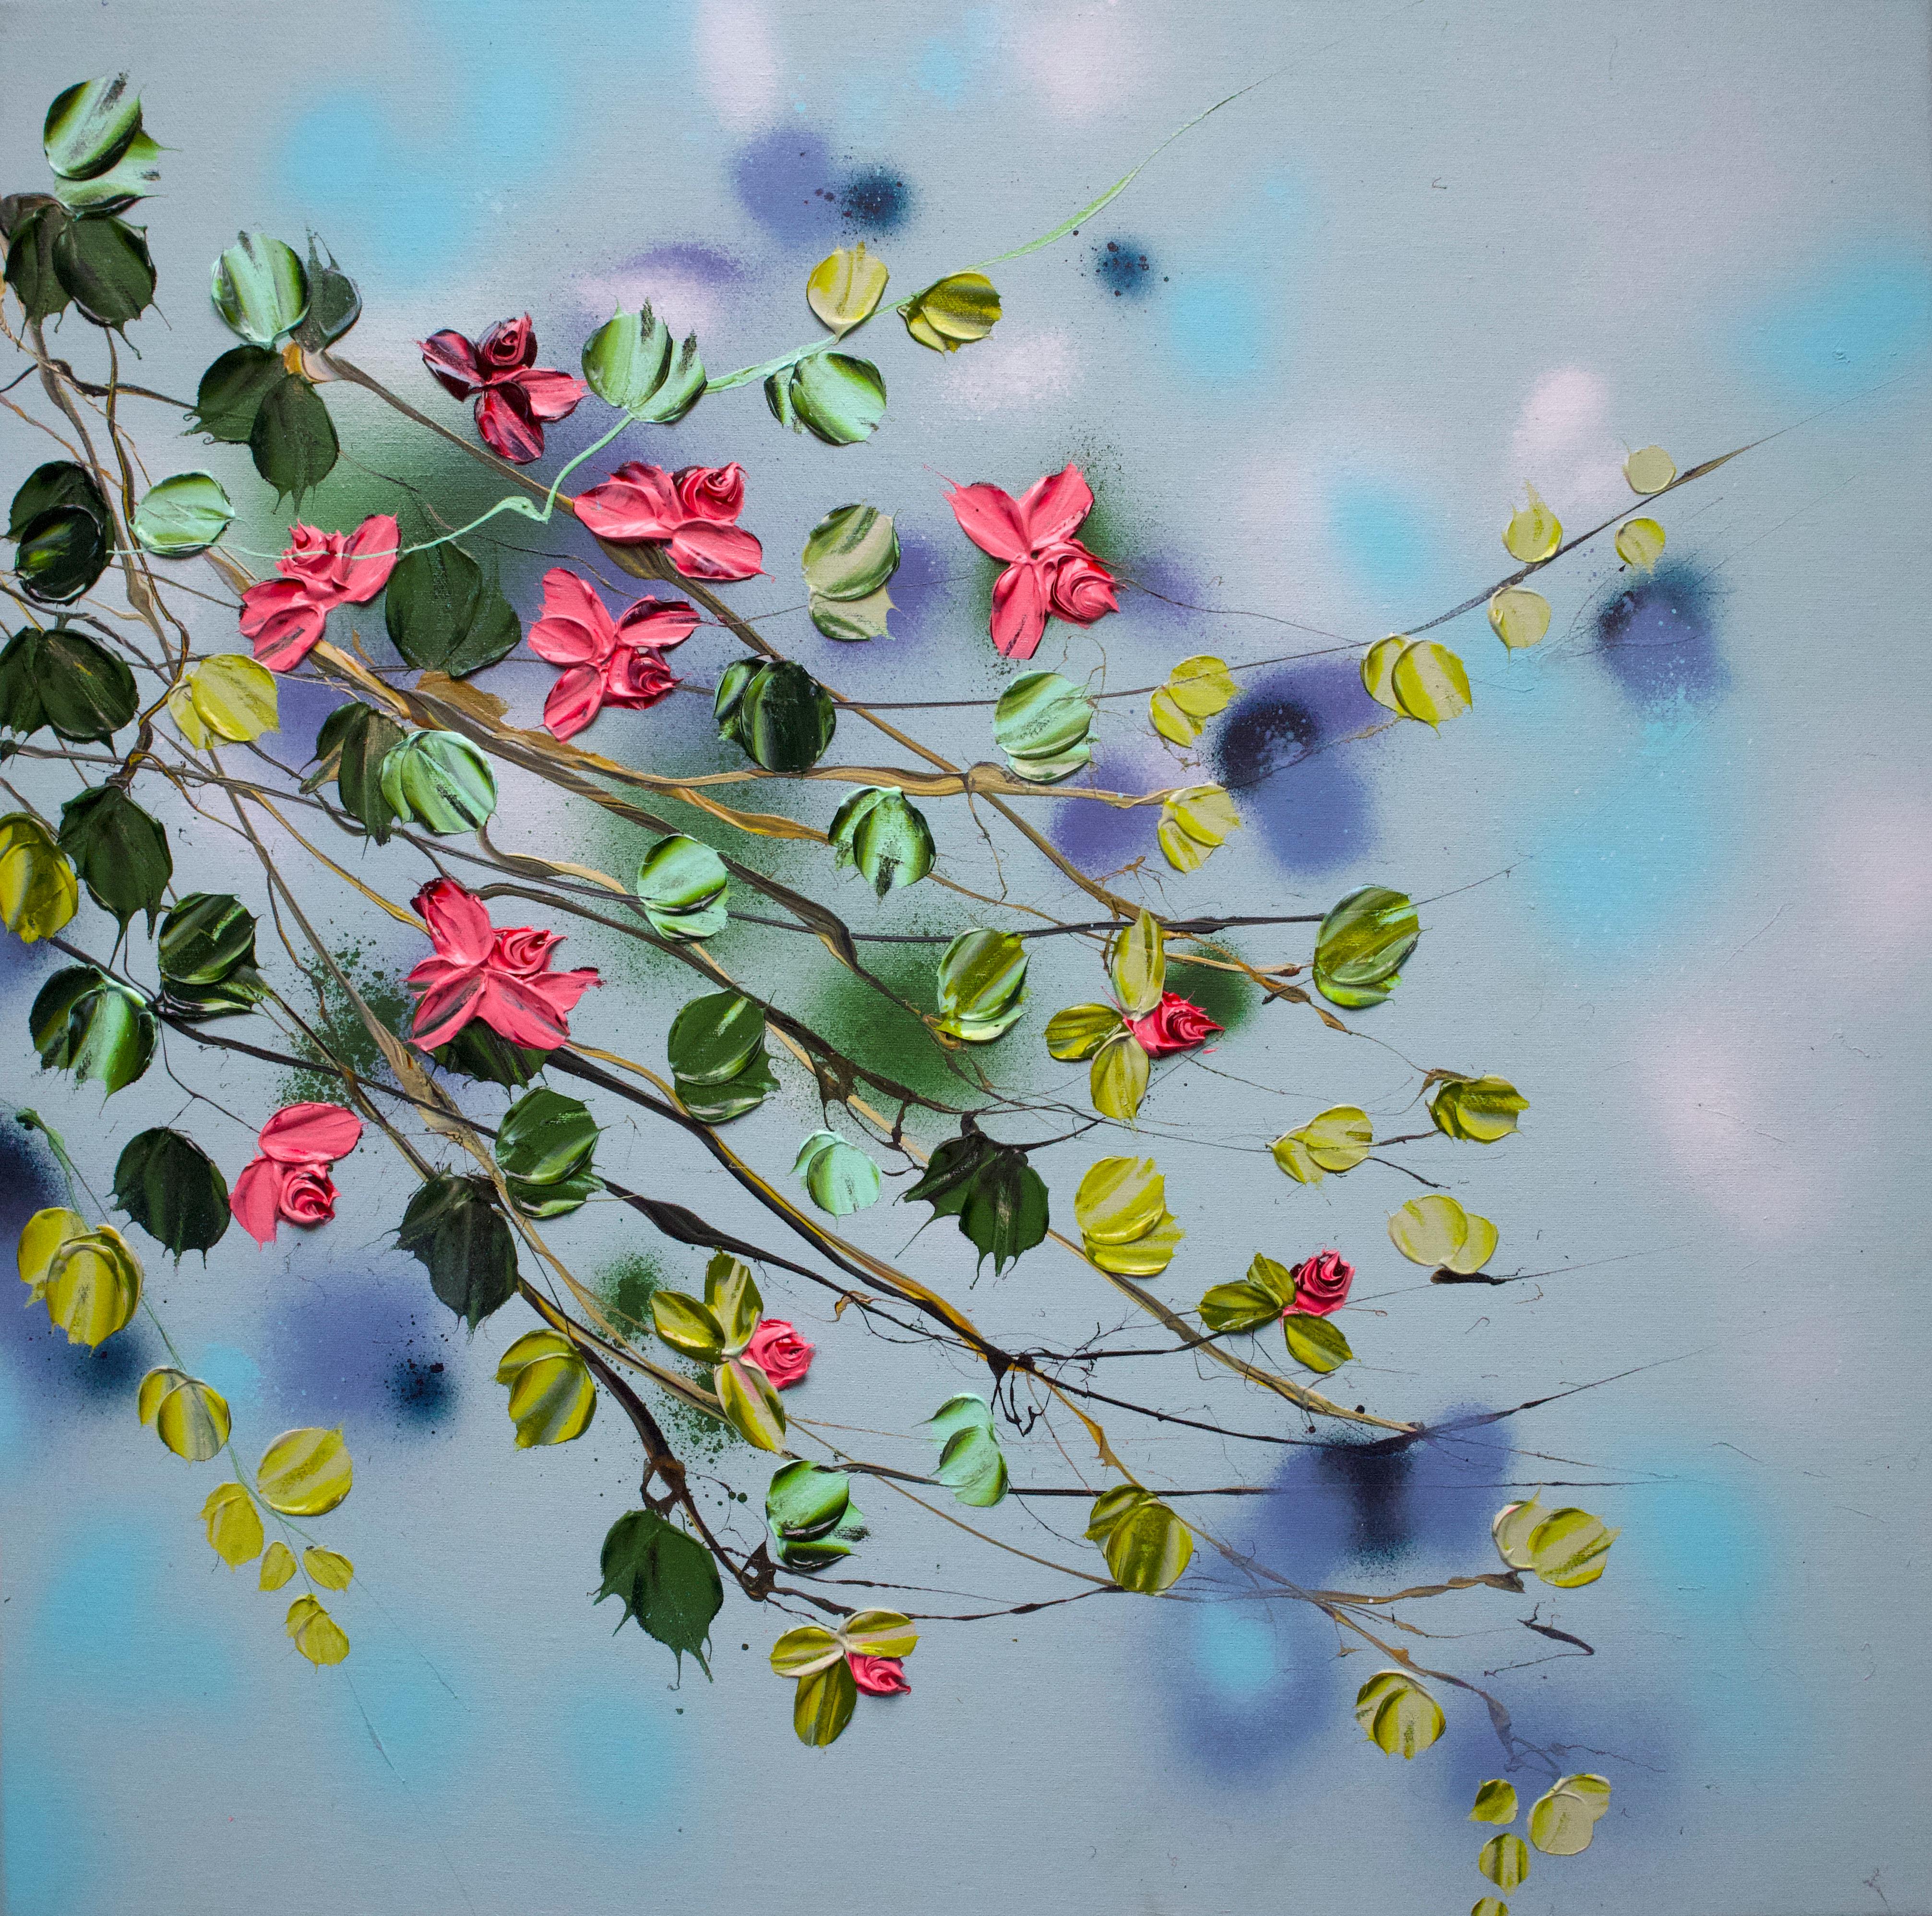 Abstract Painting Anastassia Skopp - "Satori Blooms" peinture moderne sur toile d'empâtement floral